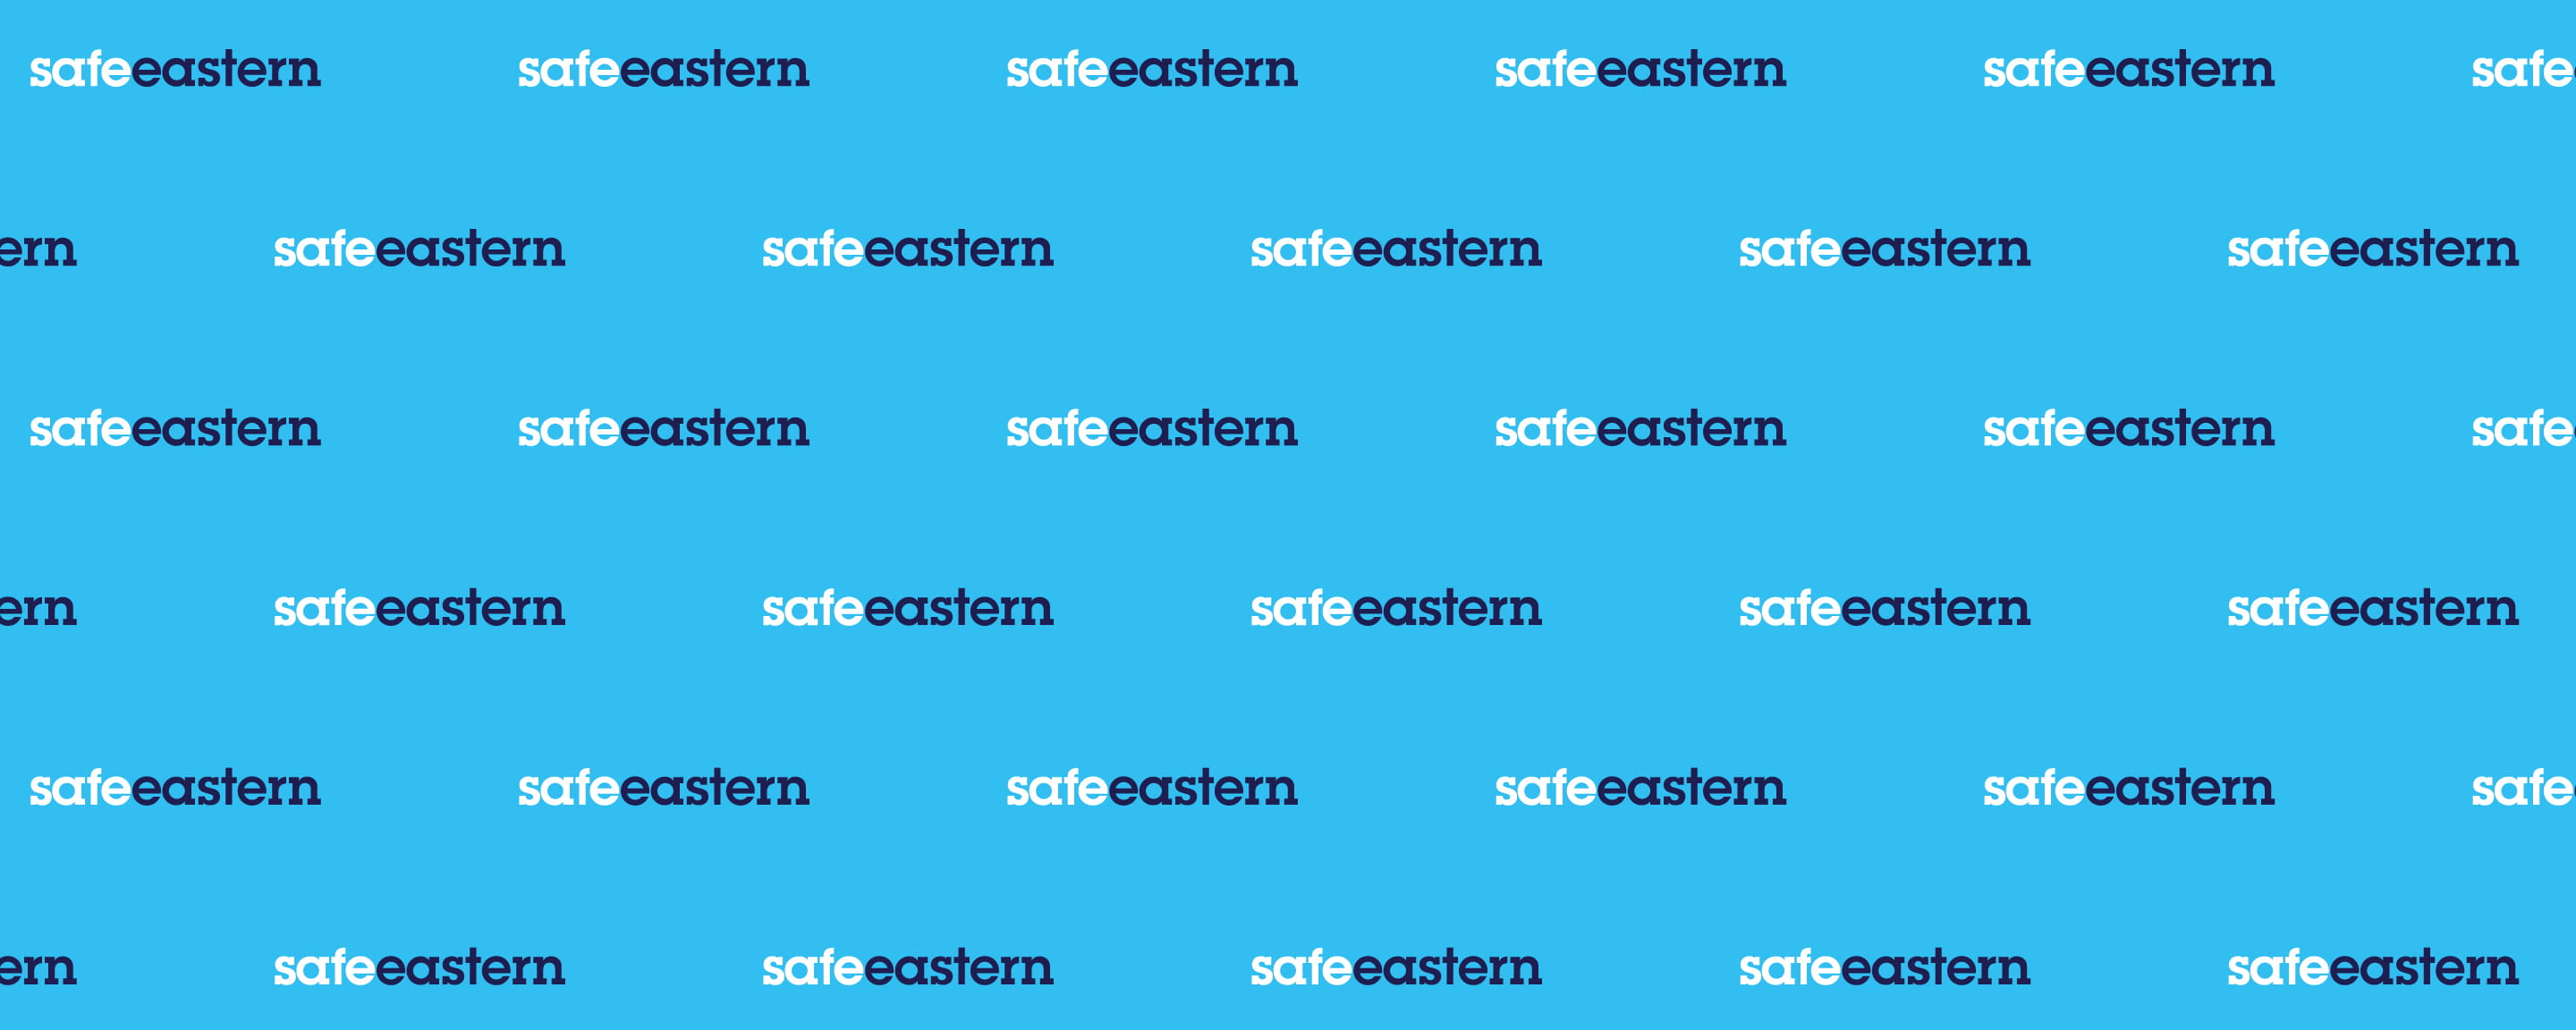 safeeastern logo on a light blue background